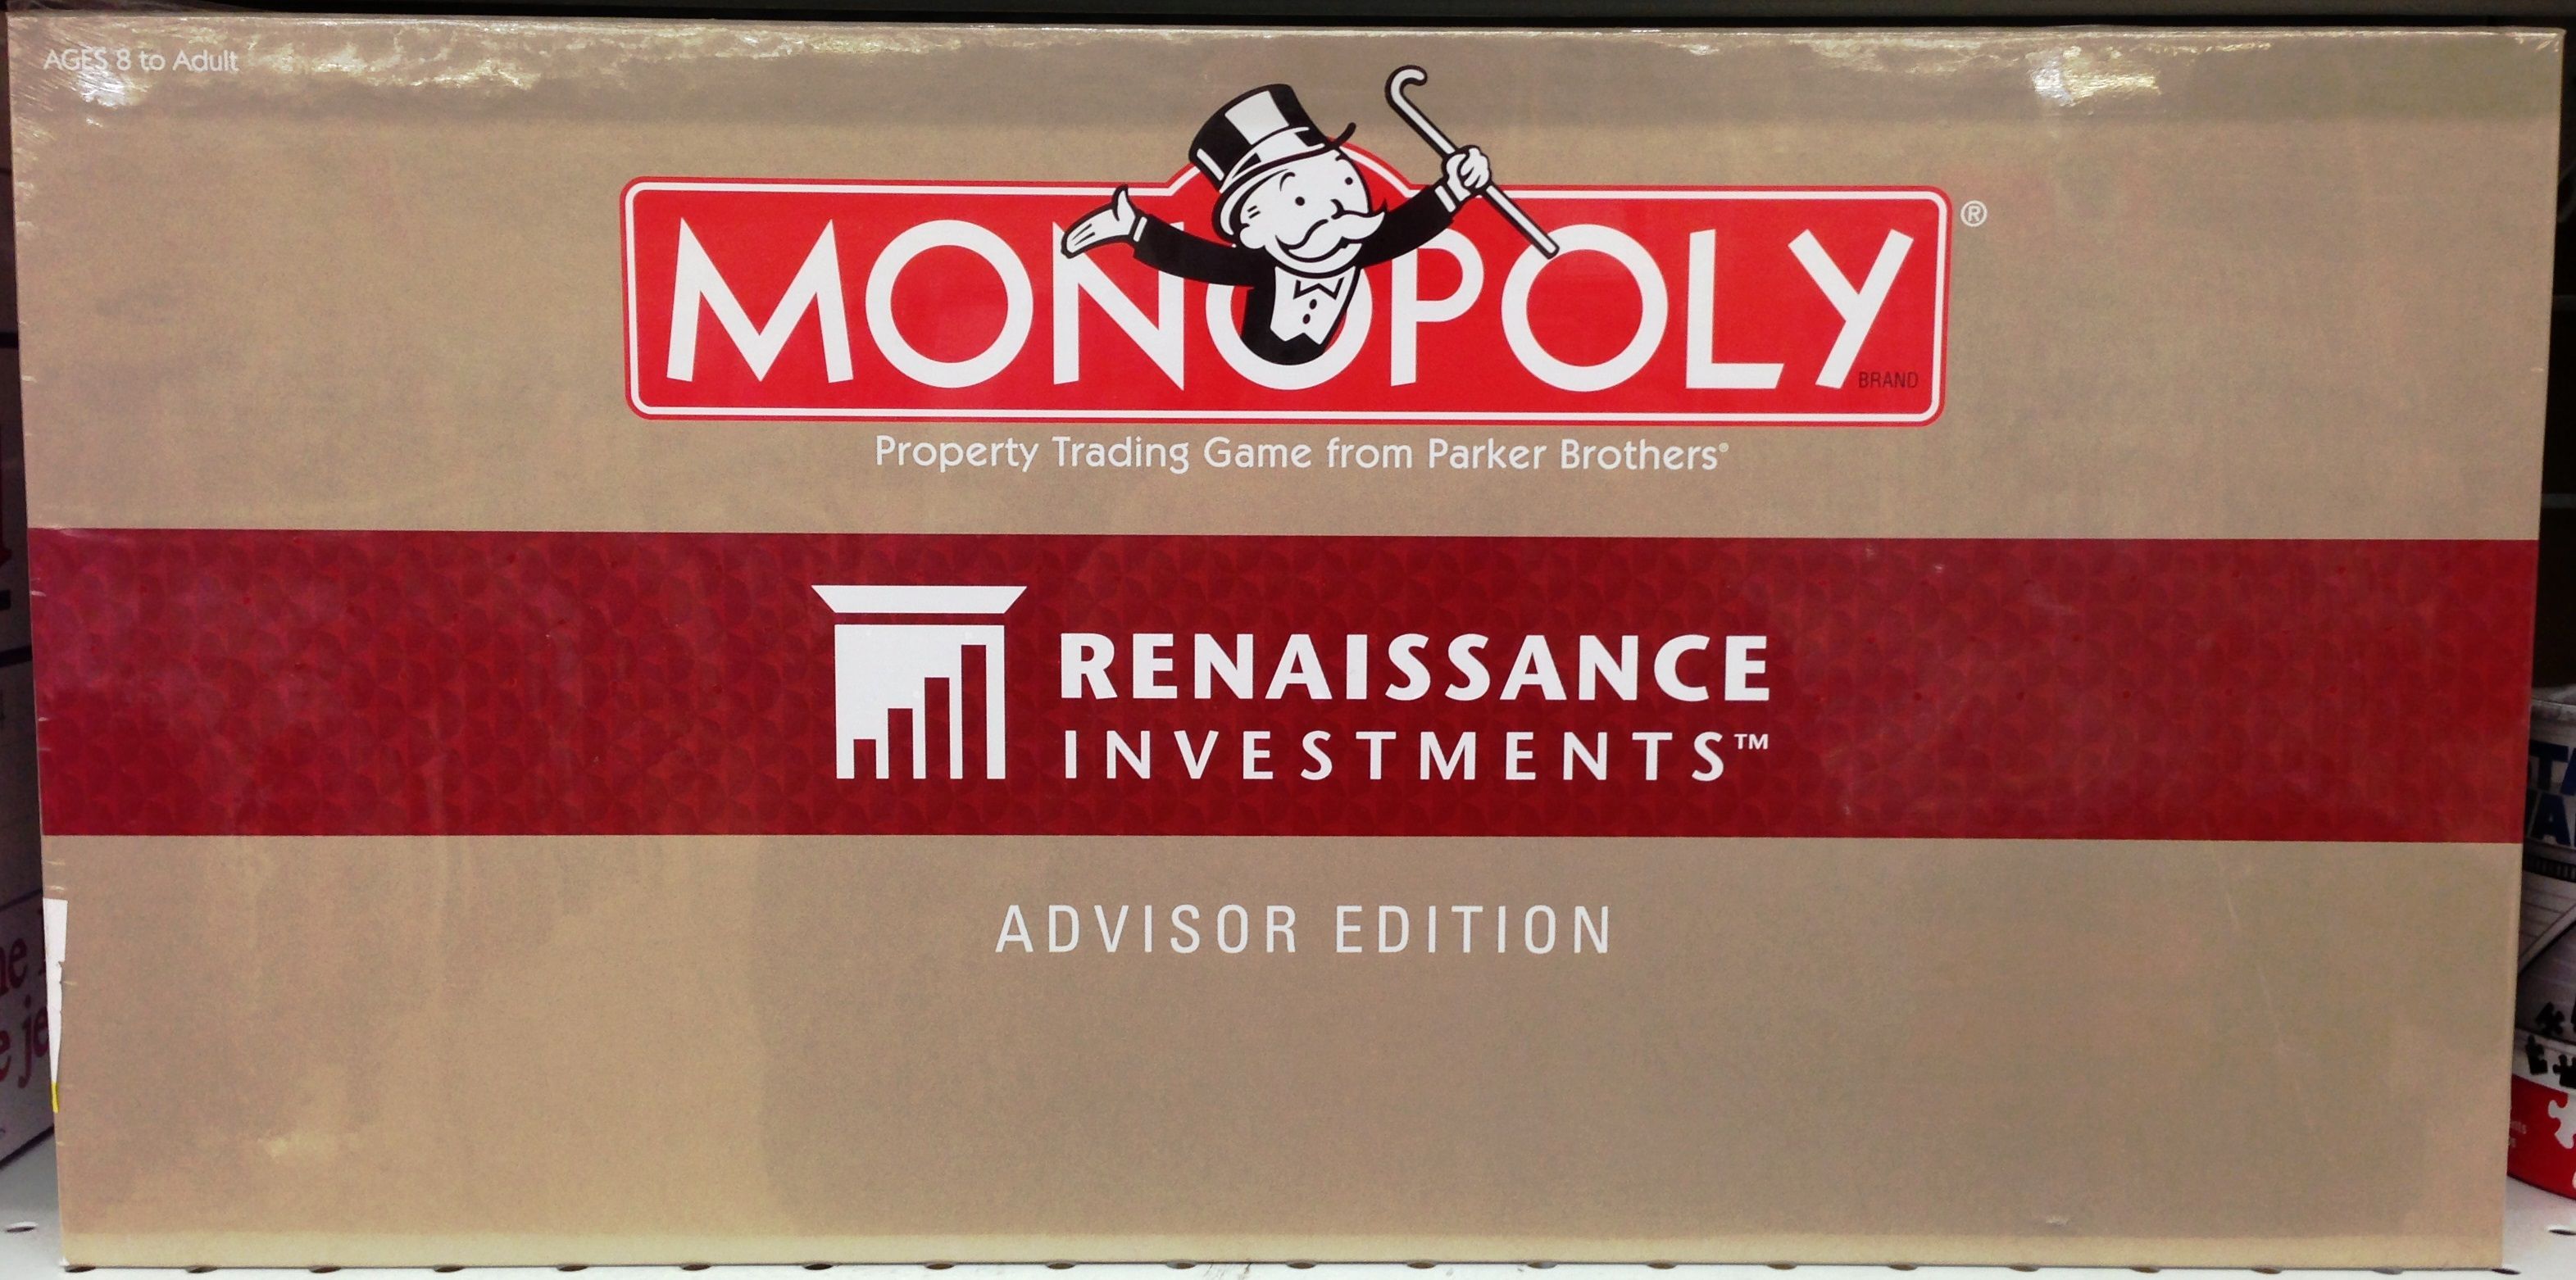 Renaissance Investments Monopoly